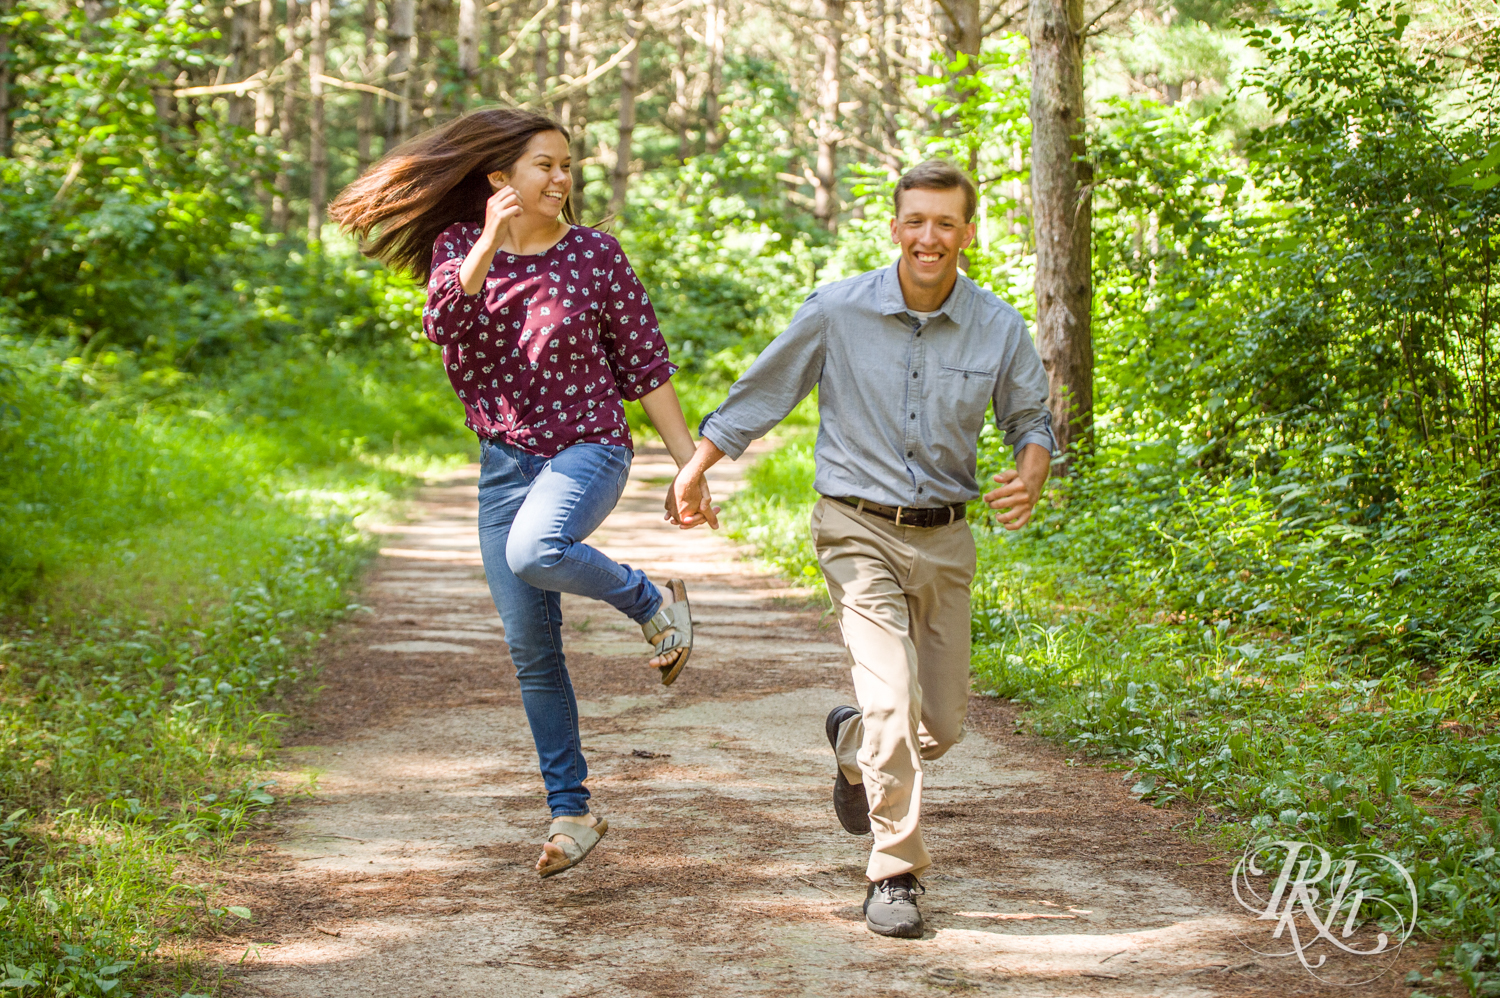 Man in denim and woman in jeans skip at Lebanon Hills Regional Park in Eagan, Minnesota.